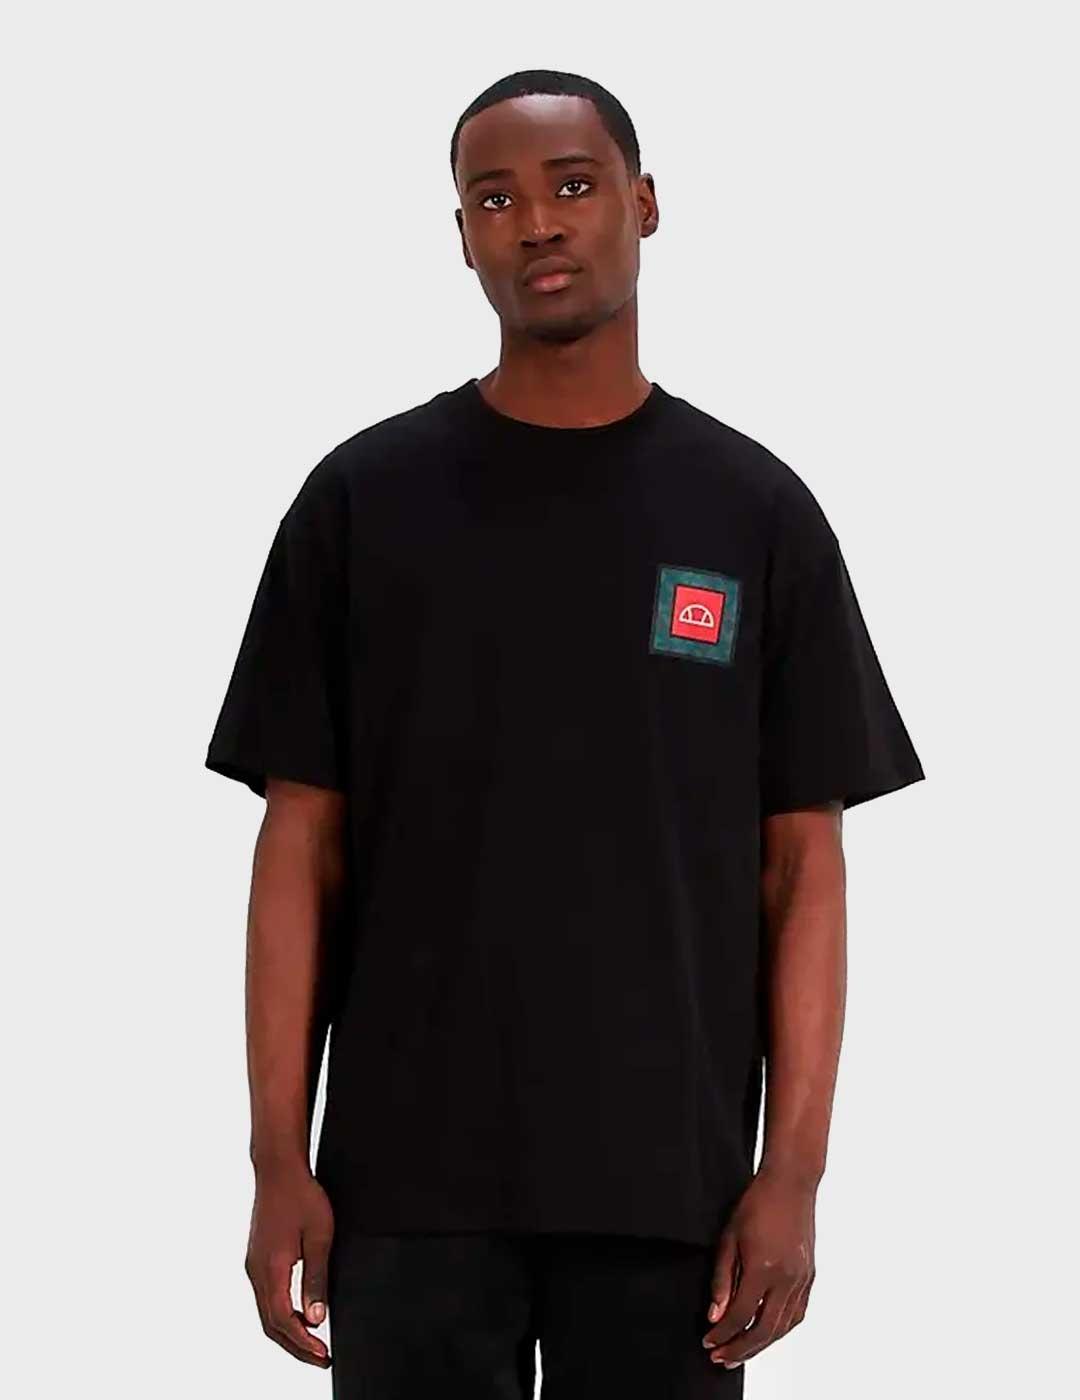 Camiseta Ellesse Portier negra para hombre